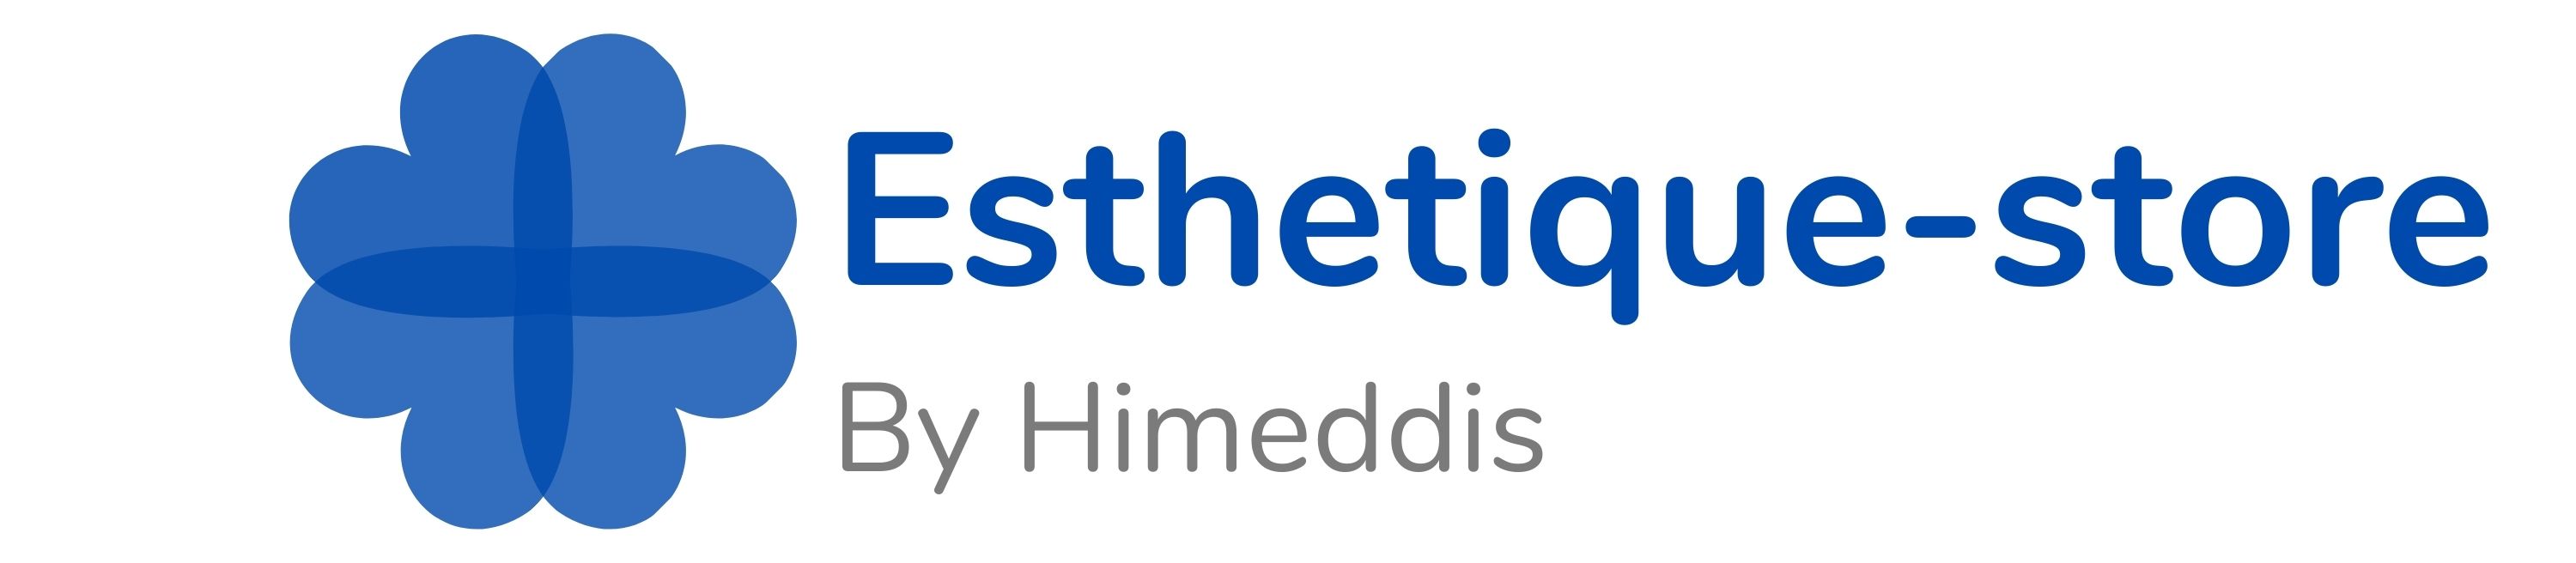 Esthetique-store by himeddis logo